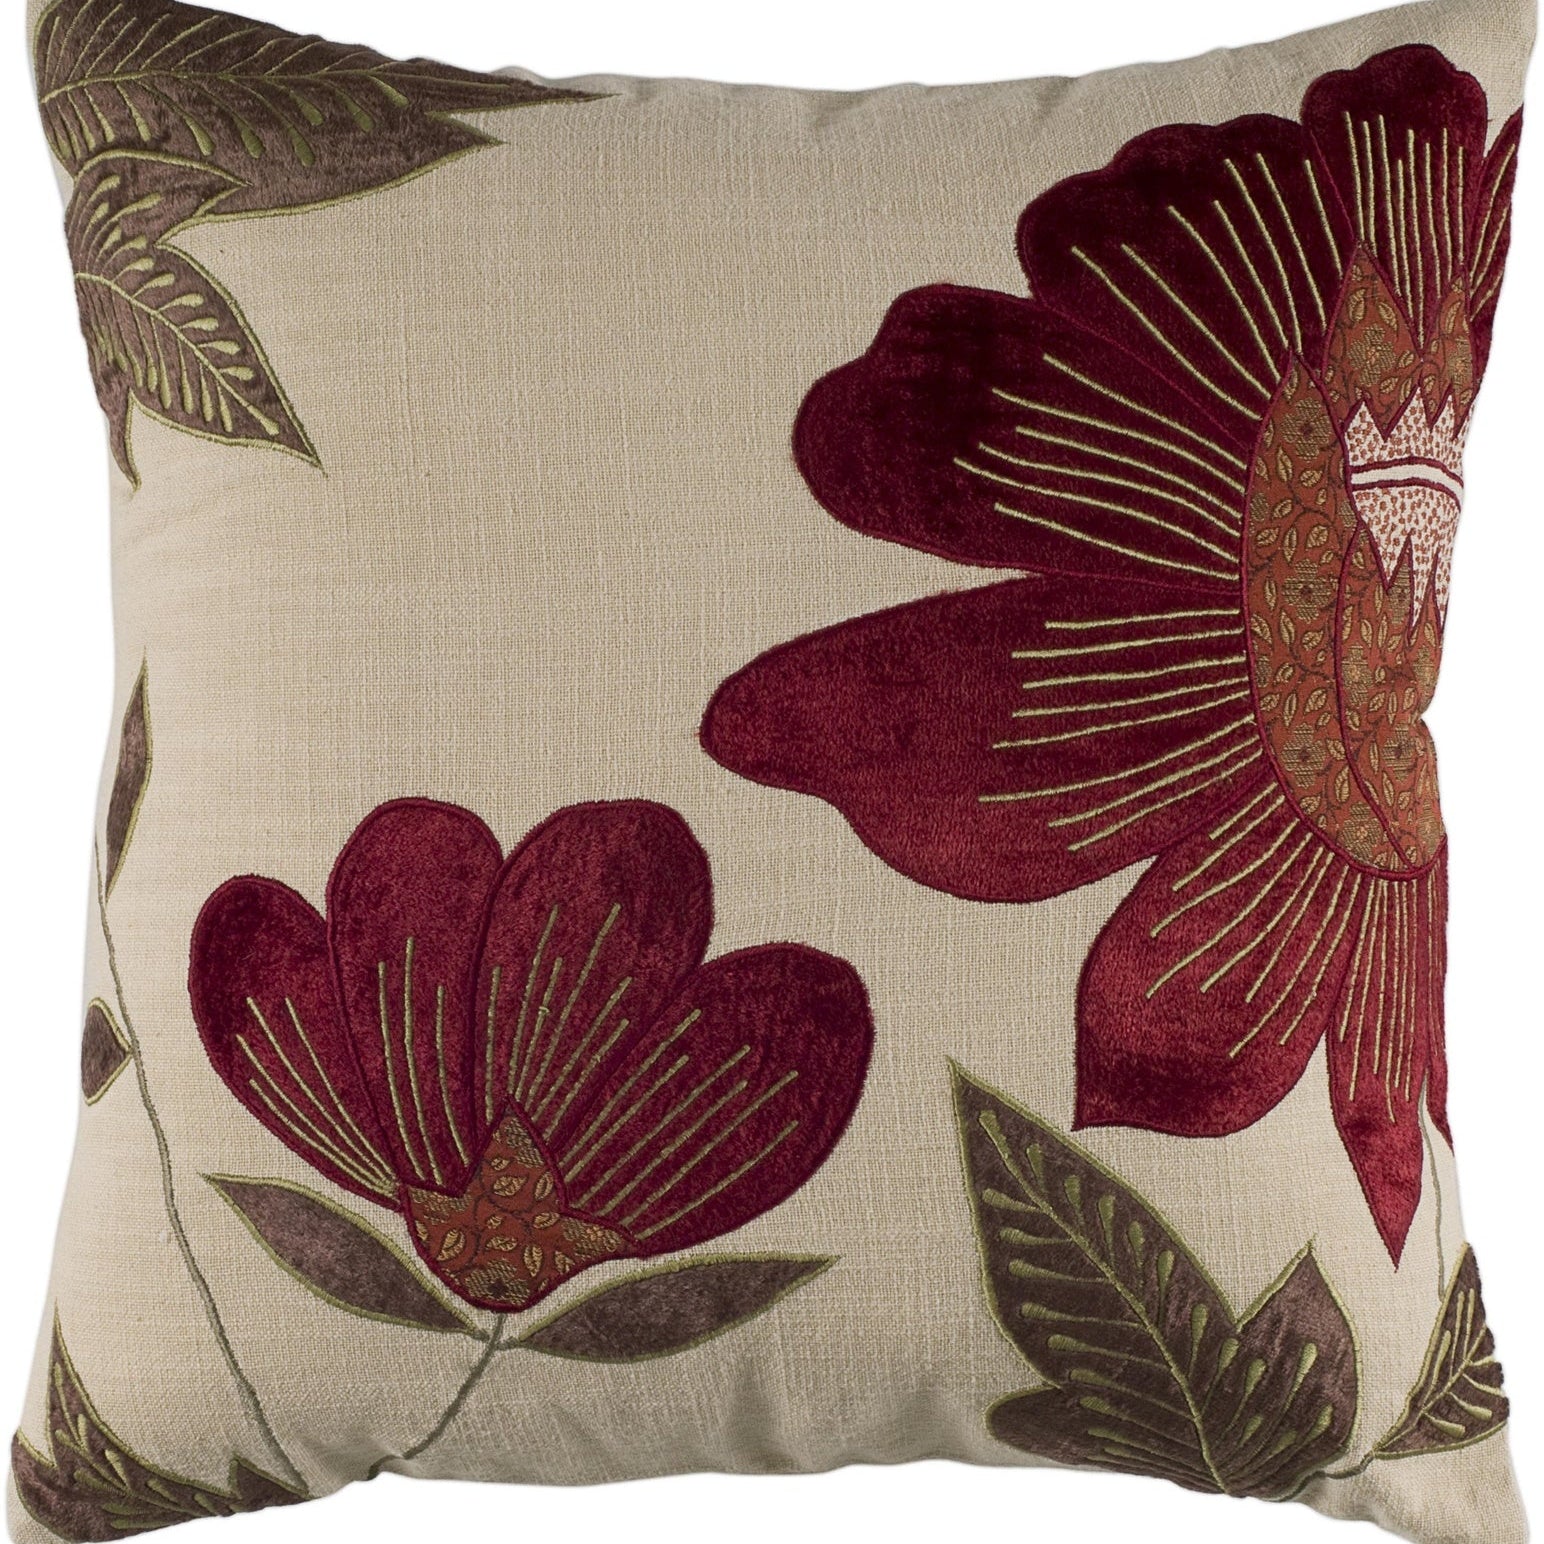 Knife Edged Velvet Floral Pillow Cover - Decorative Pillows